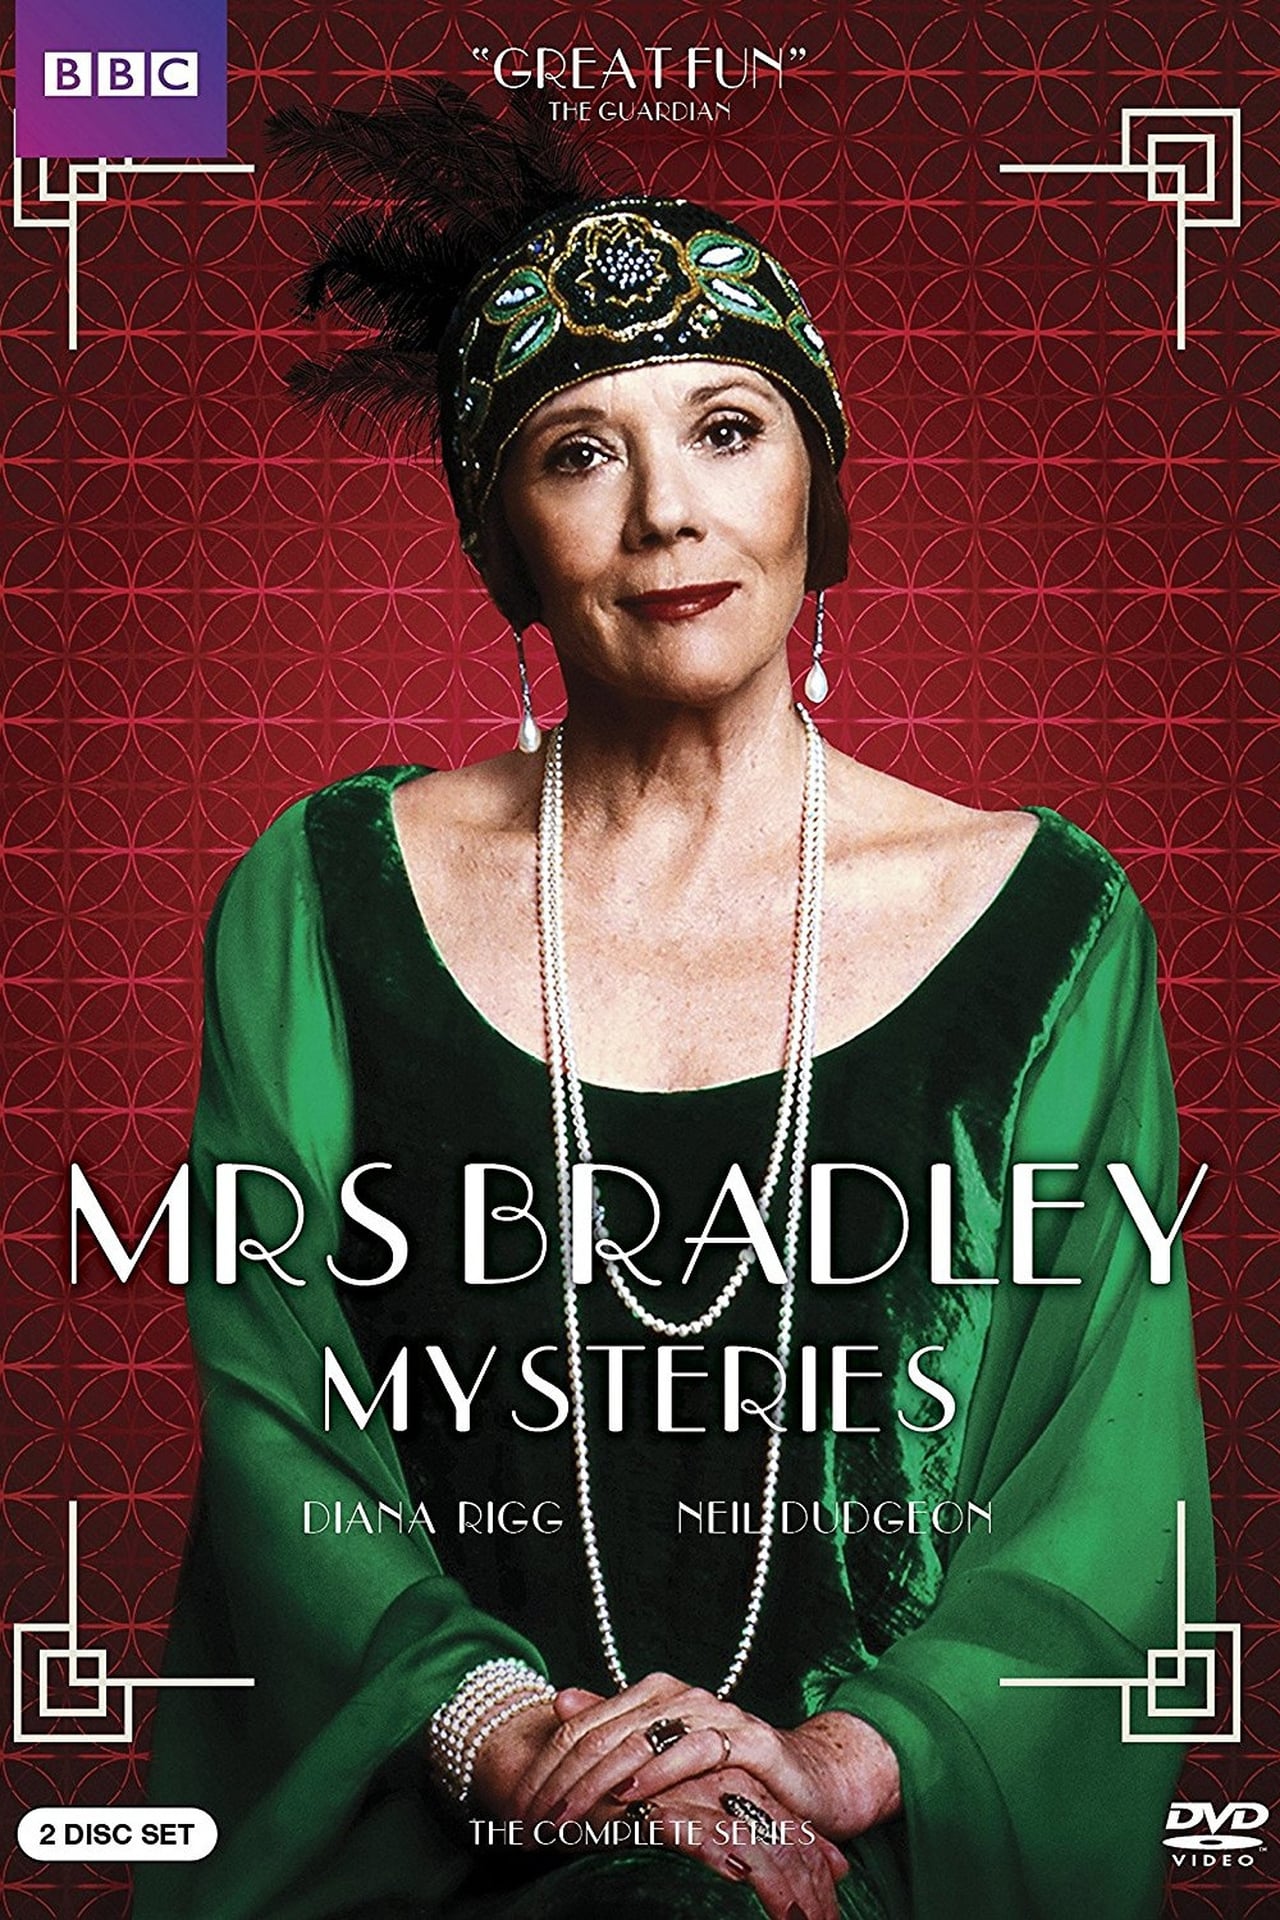 The Mrs Bradley Mysteries Season 1